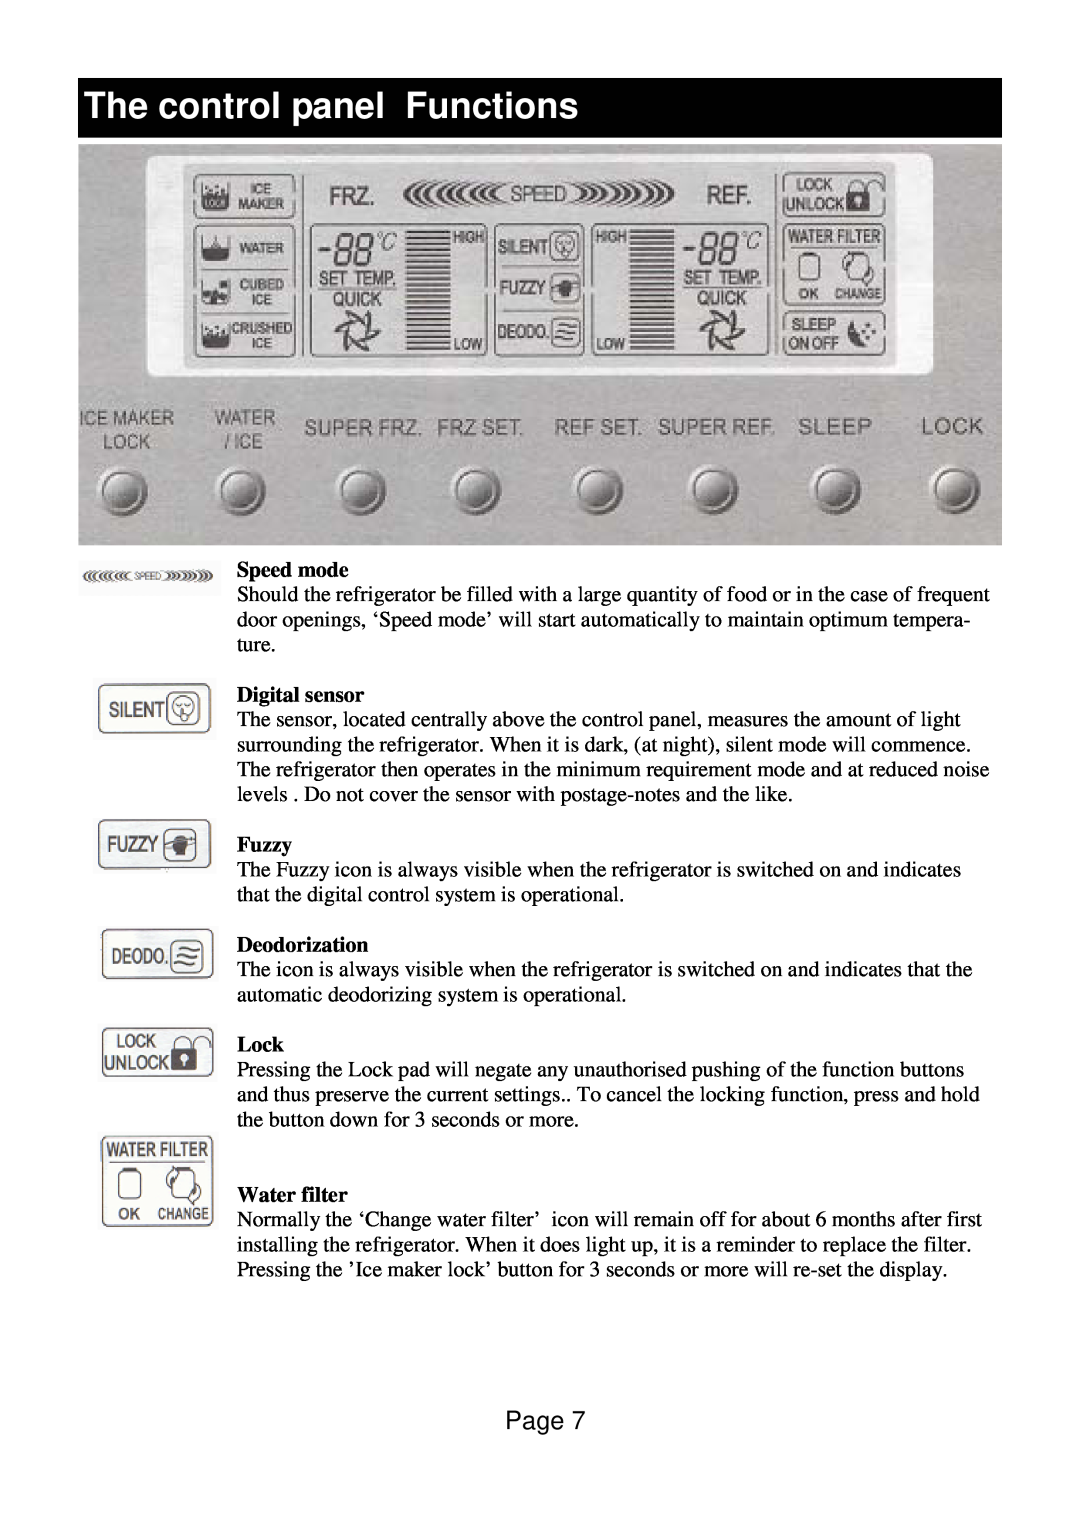 Defy Appliances F 600 LM The control panel Functions, Speed mode, Digital sensor, Fuzzy, Deodorization, Lock, Water filter 